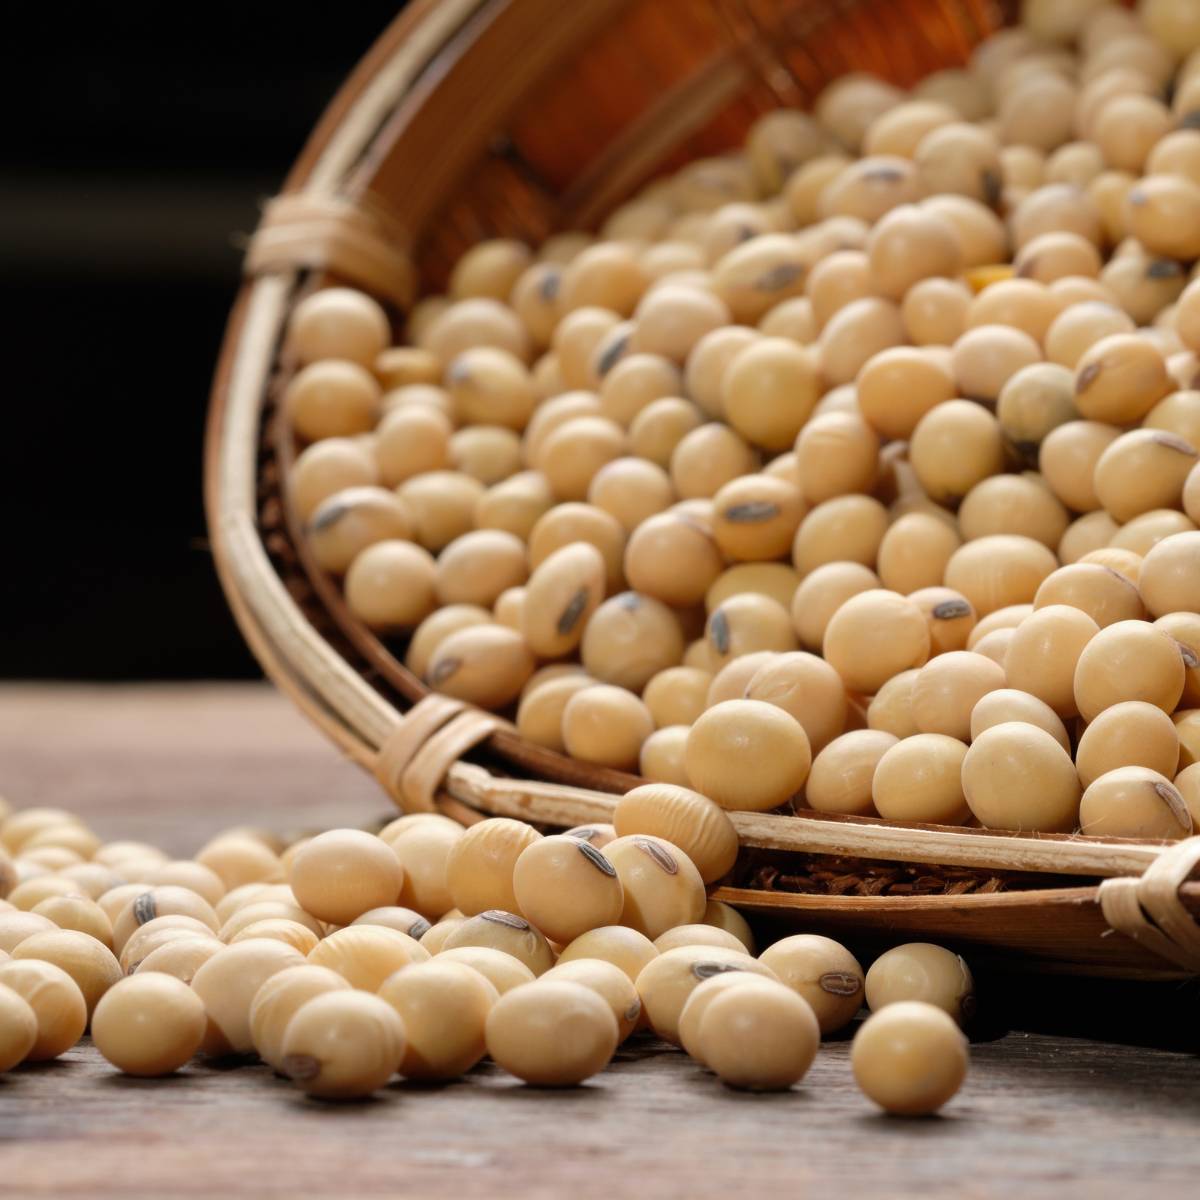 Soybean as raw material in making tofu